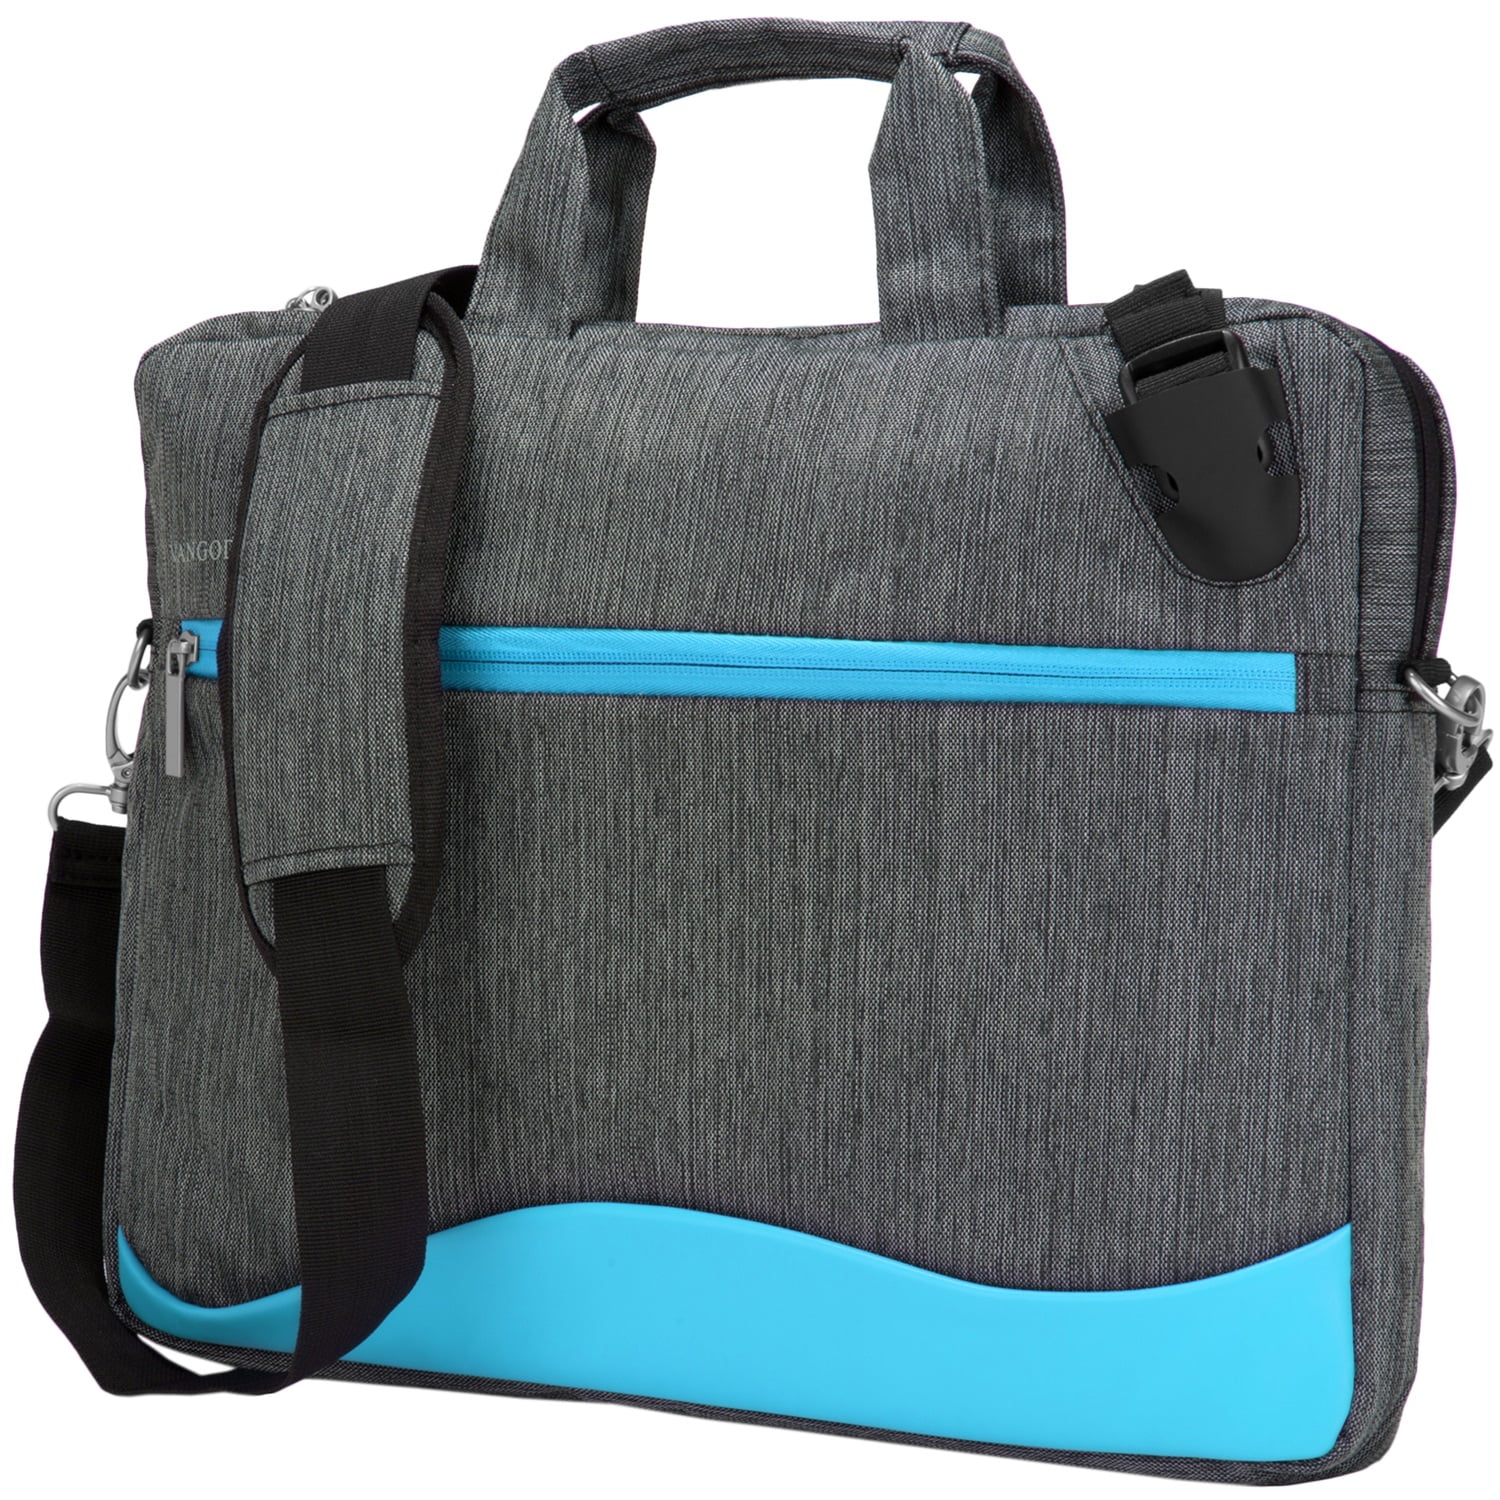 Unisex Laptop Shoulder Bag Messenger Bag 13 Inch for Men Women Compatible  with 13 13.3 inch MacBook Pro MacBook Air Notebook Computer